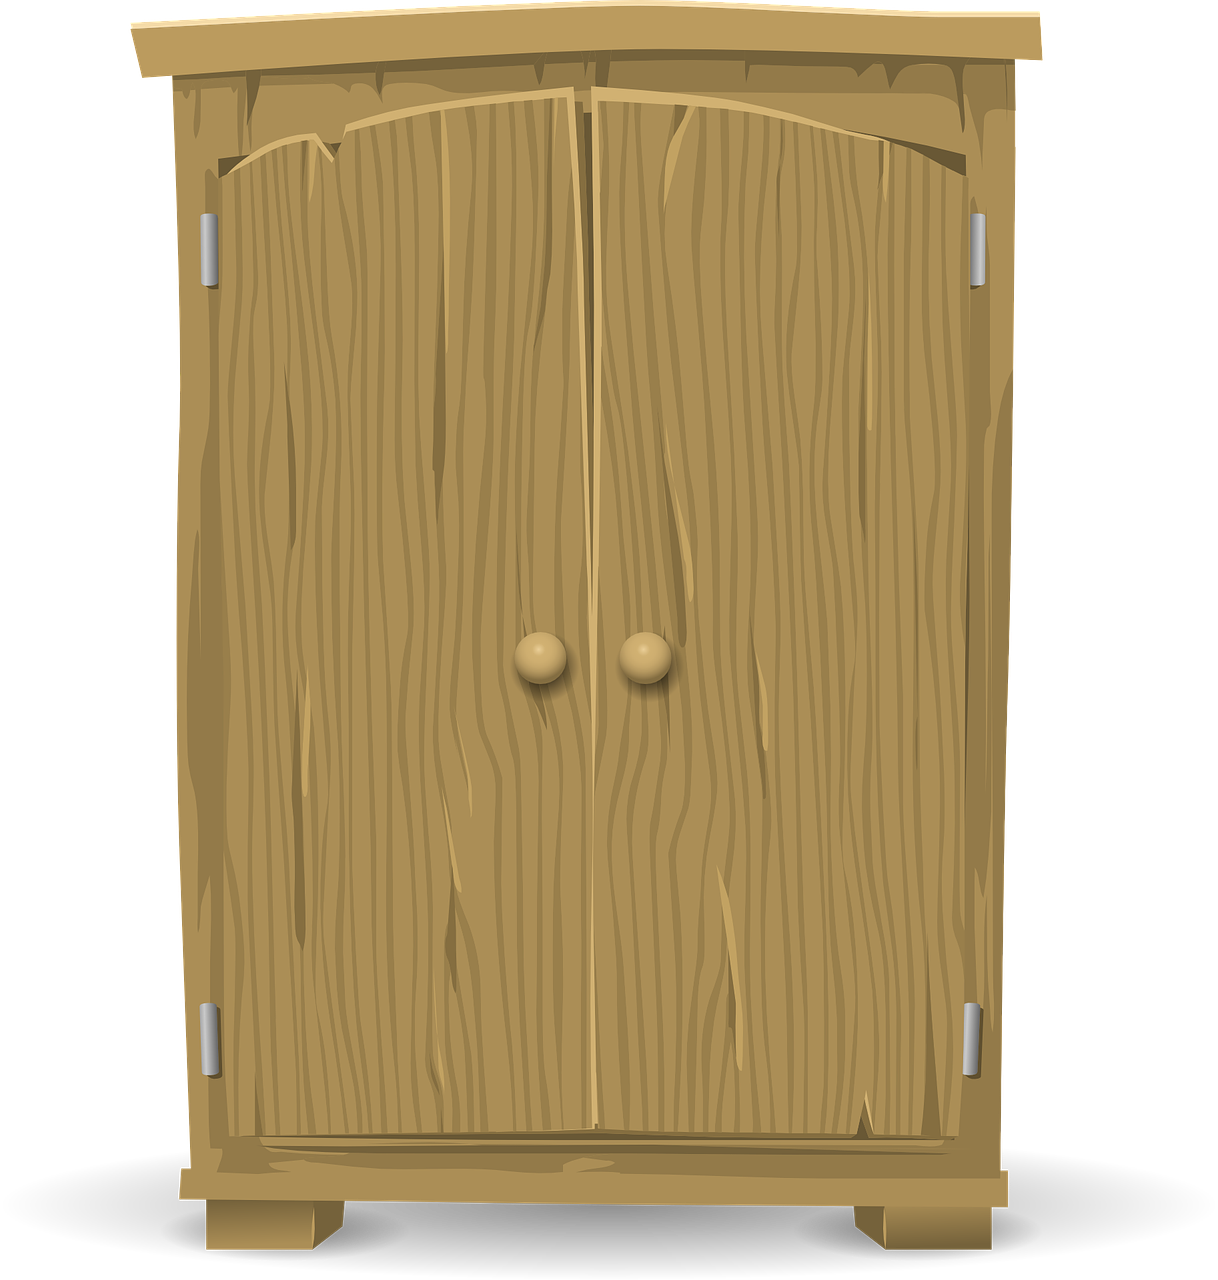 armoire dresser furniture free photo